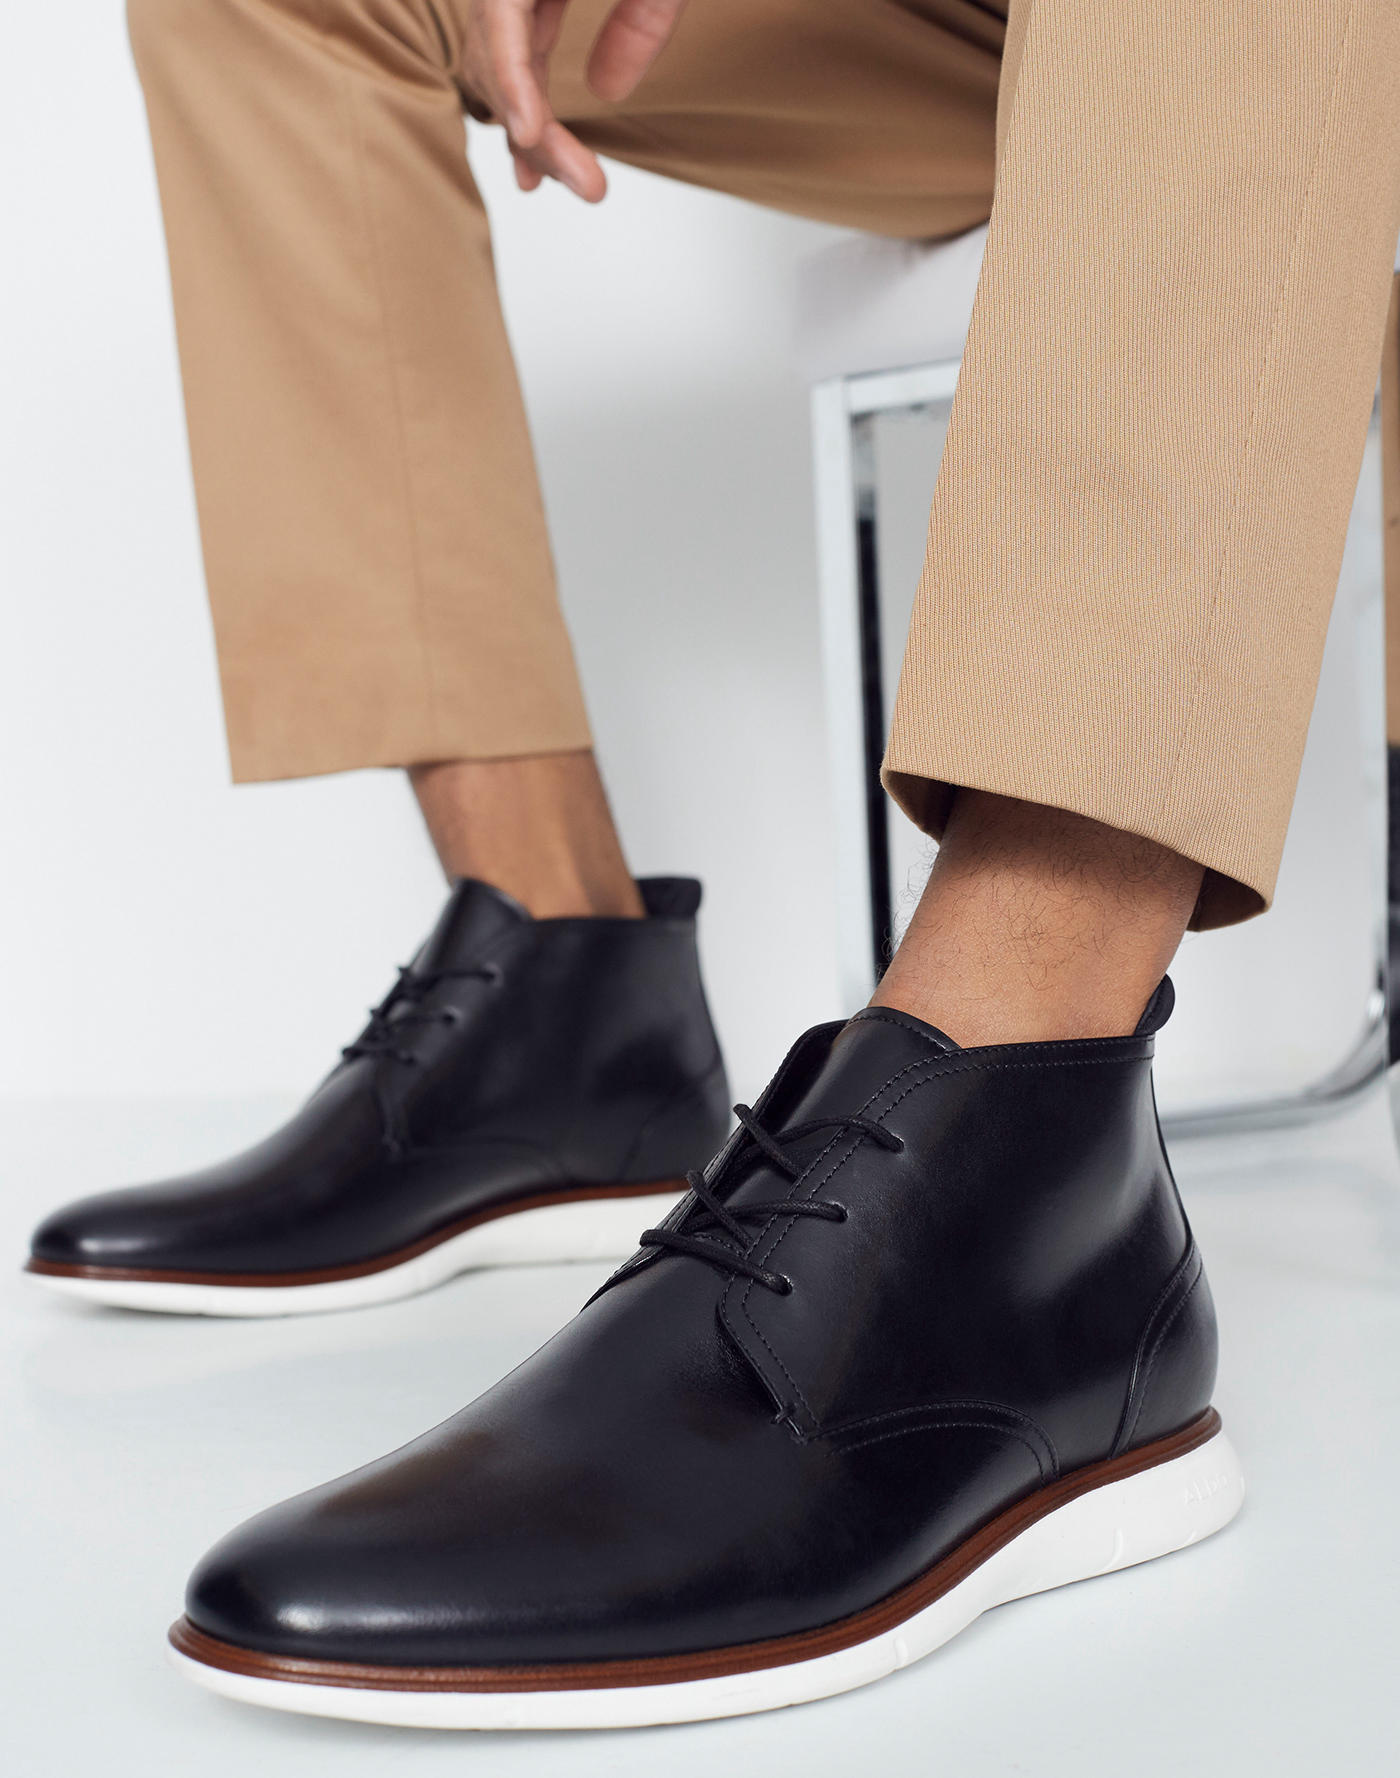 Dress boots for men | Aldoshoes.com US